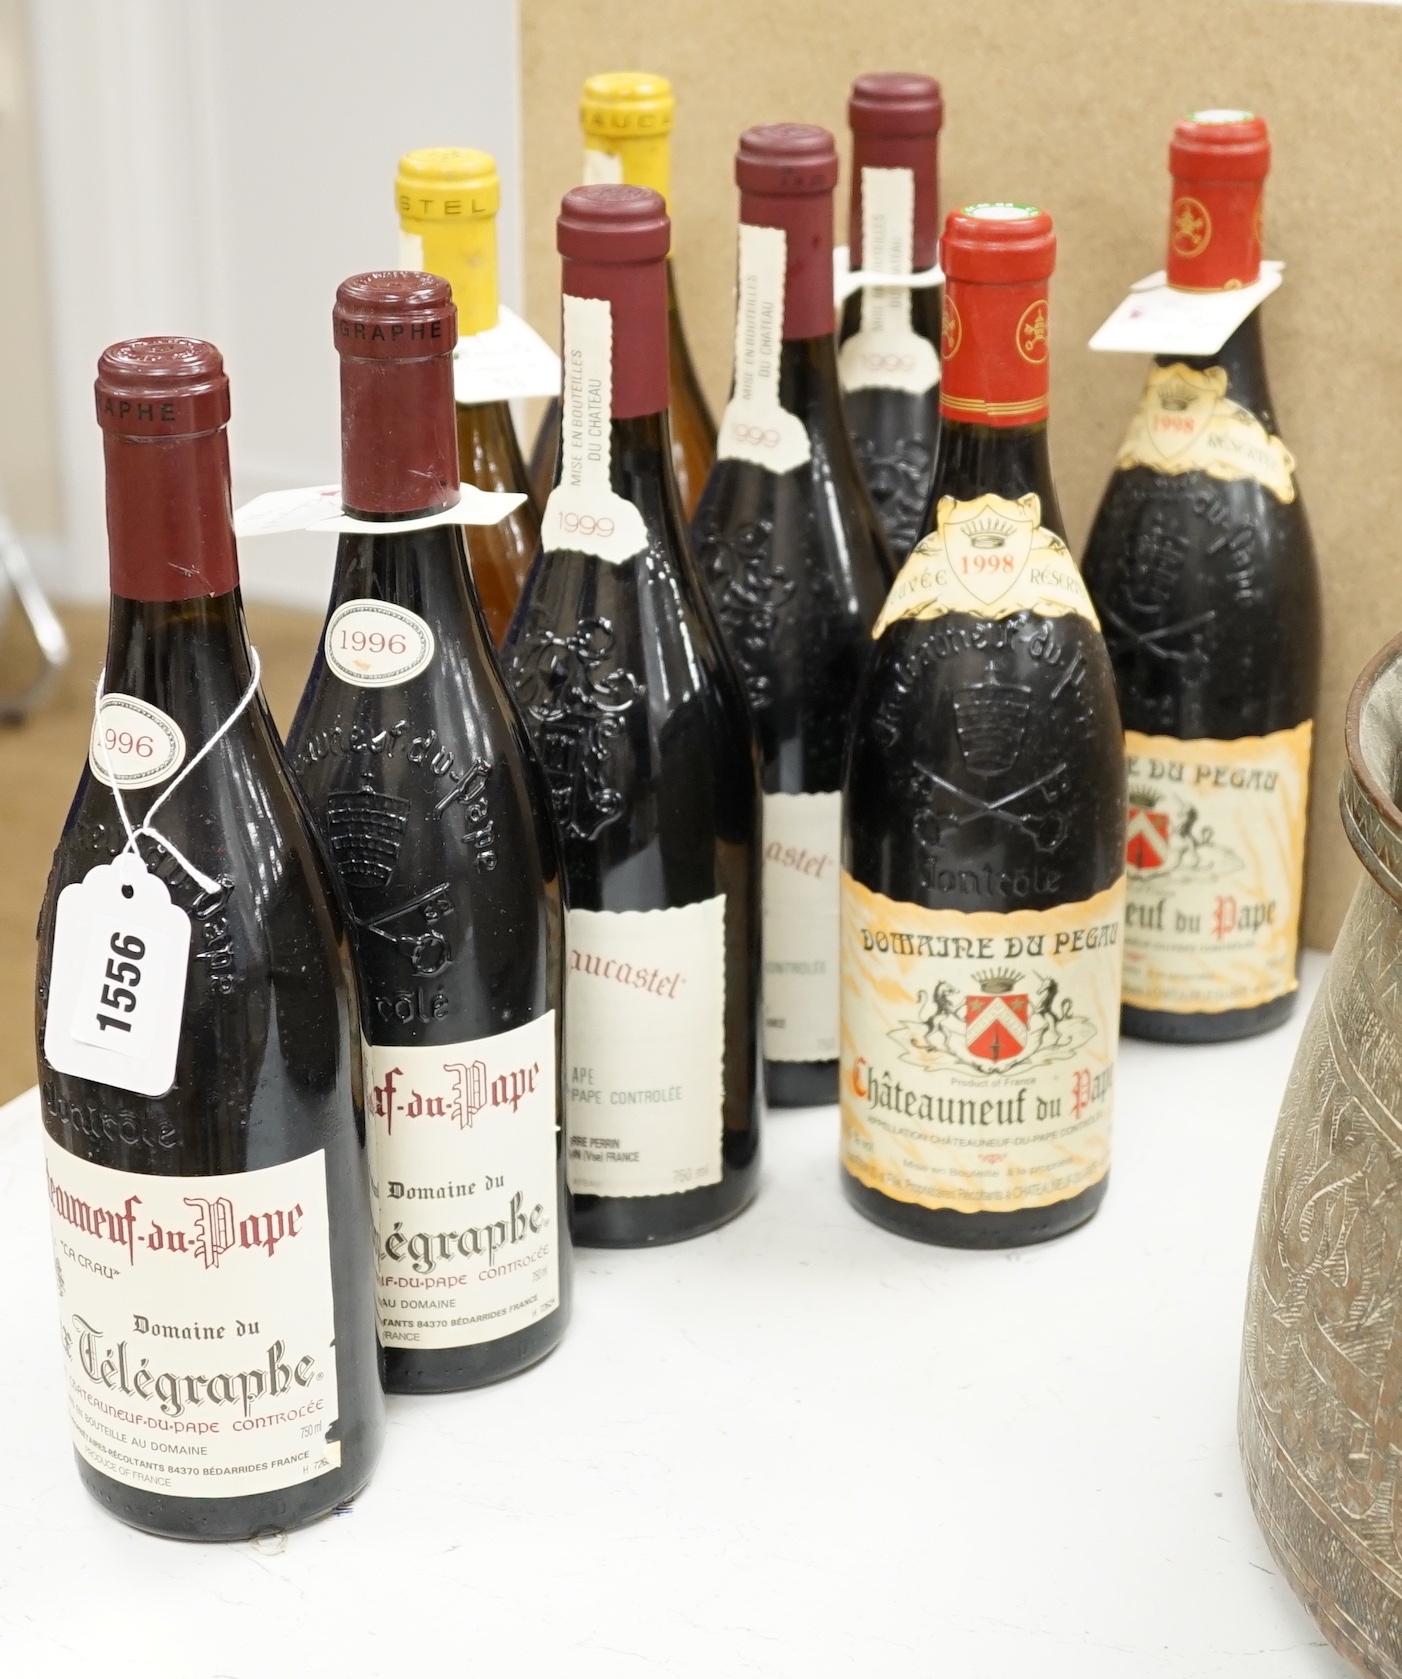 9 bottles of wine - 5 bottles of 1996 Chateauneuf Du Pape Dieux Telegraphe, 2 bottles of 1998 Chateauneuf Du Pape Domaine Du Pegau and 2 bottles of 1996 Chateau De Beaucastel